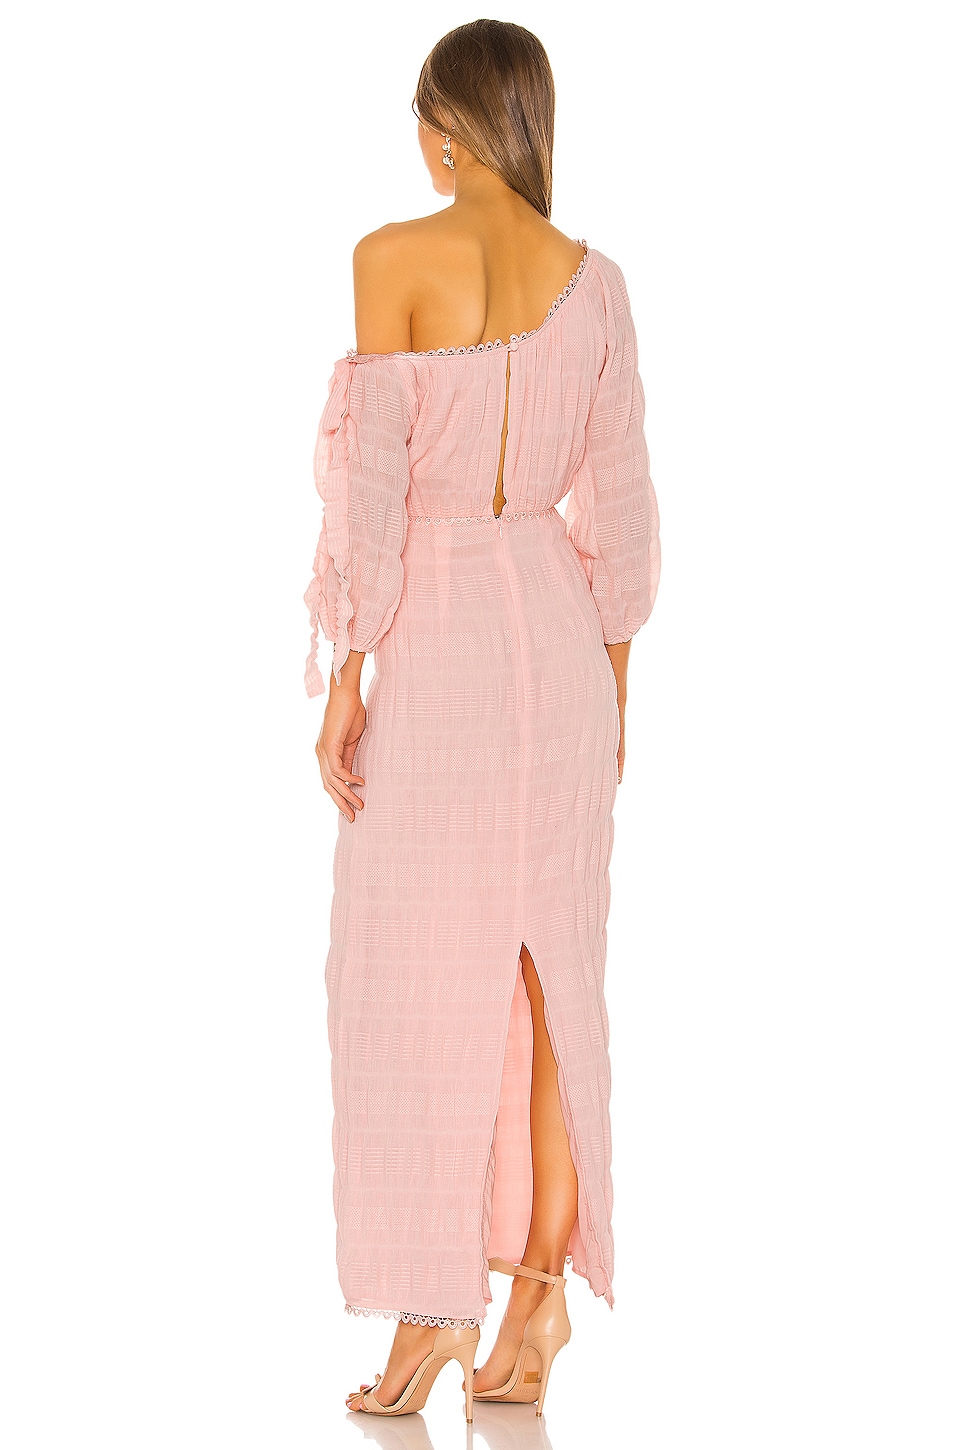 Tularosa Bet Dress in Blush Pink | REVOLVE